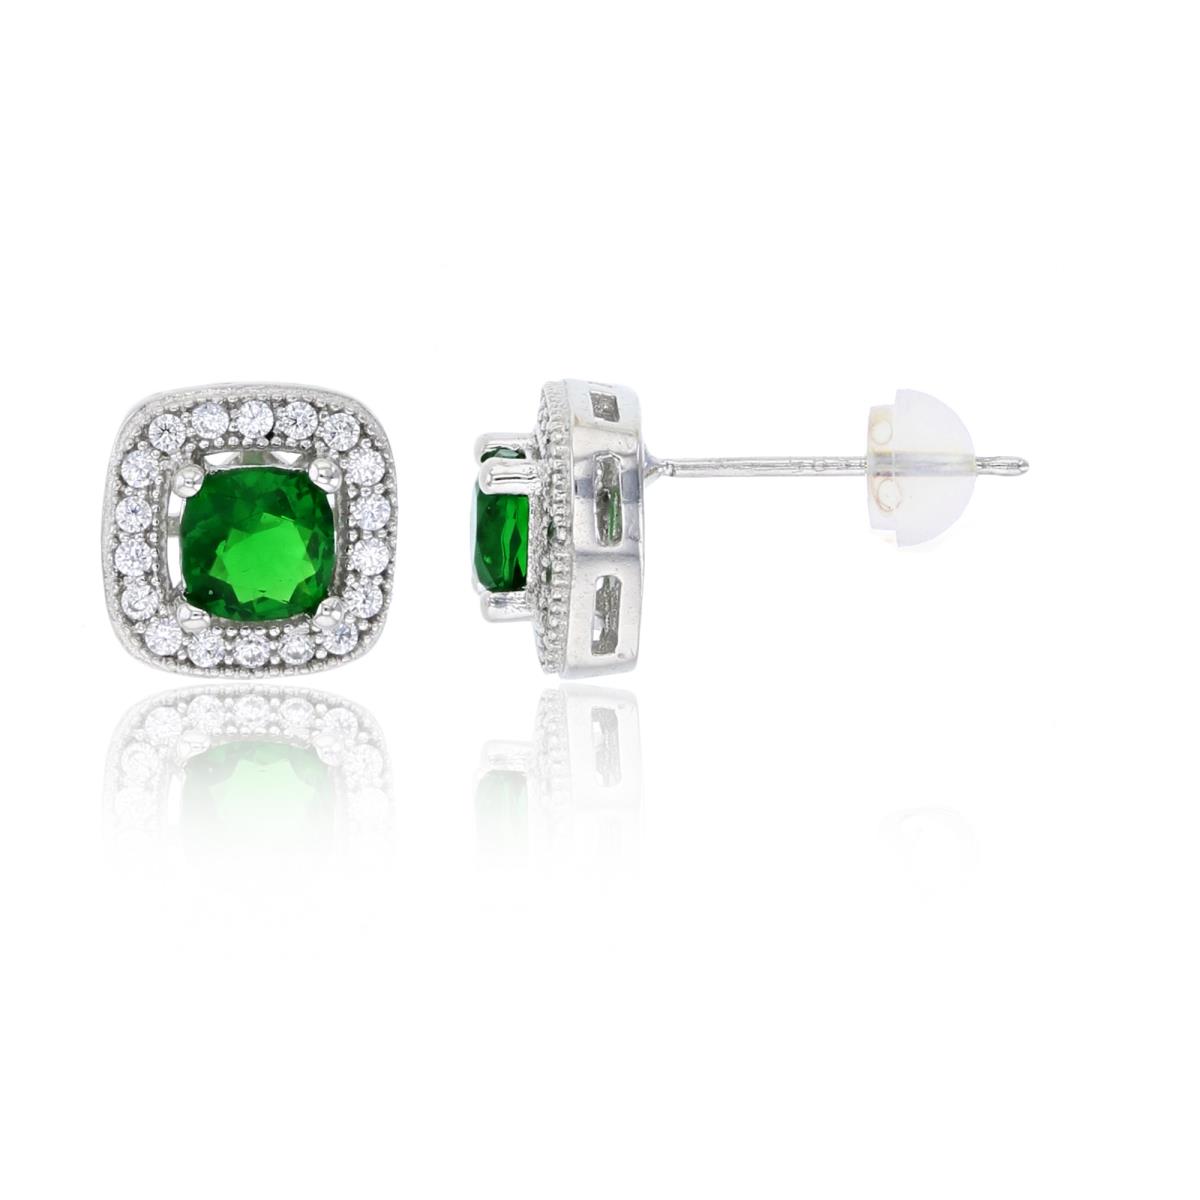 10K White Gold 4x4mm Emerald Cushion Cut & White Rd CZ Milgrain Frame Stud Earring with Silicone Back